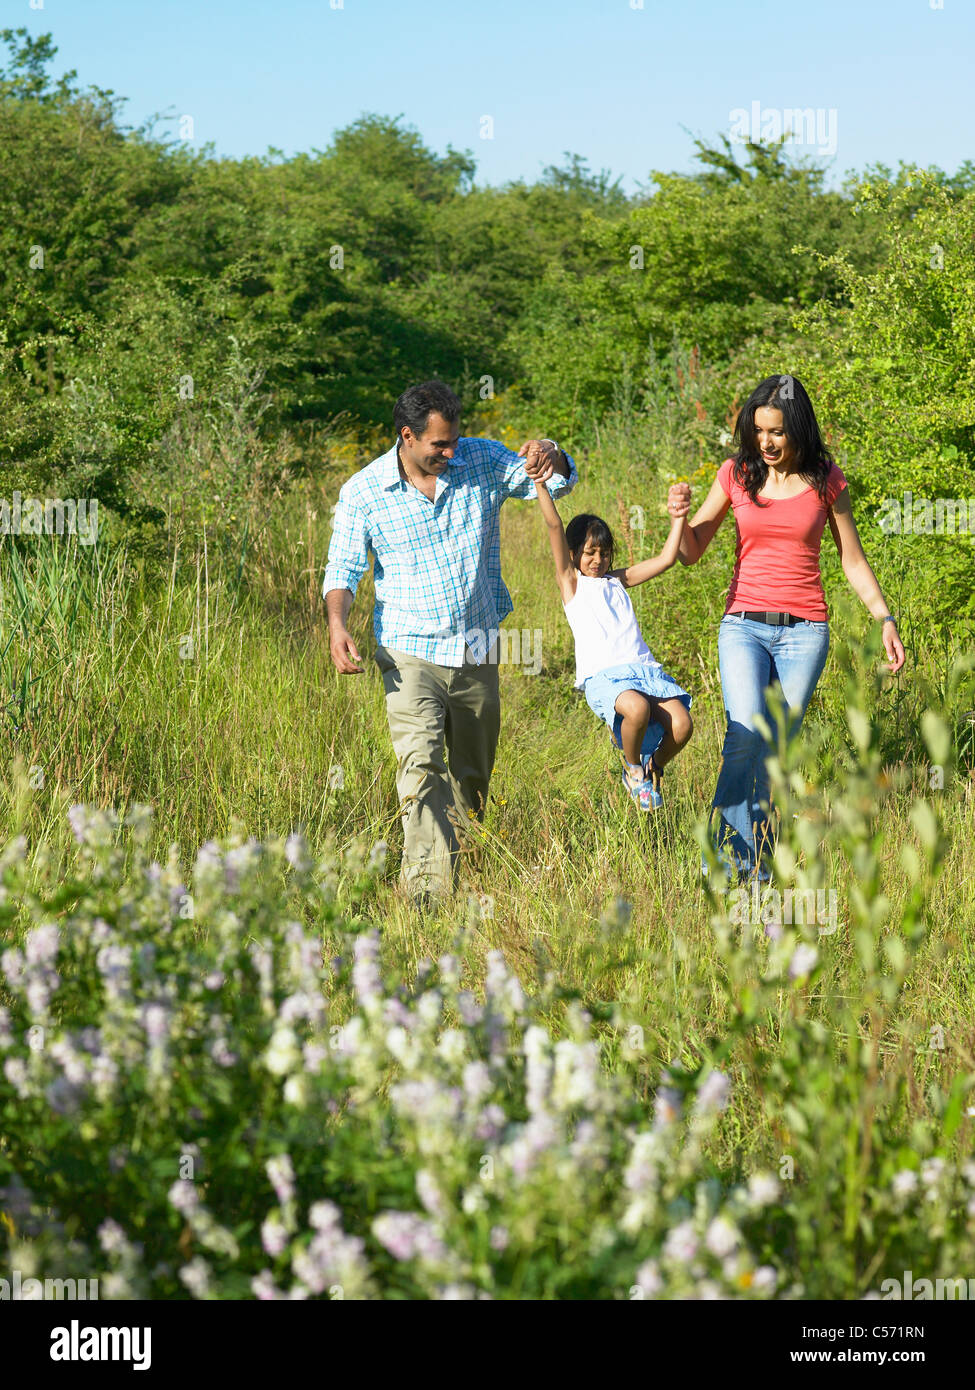 Family walking in field of flowers Stock Photo